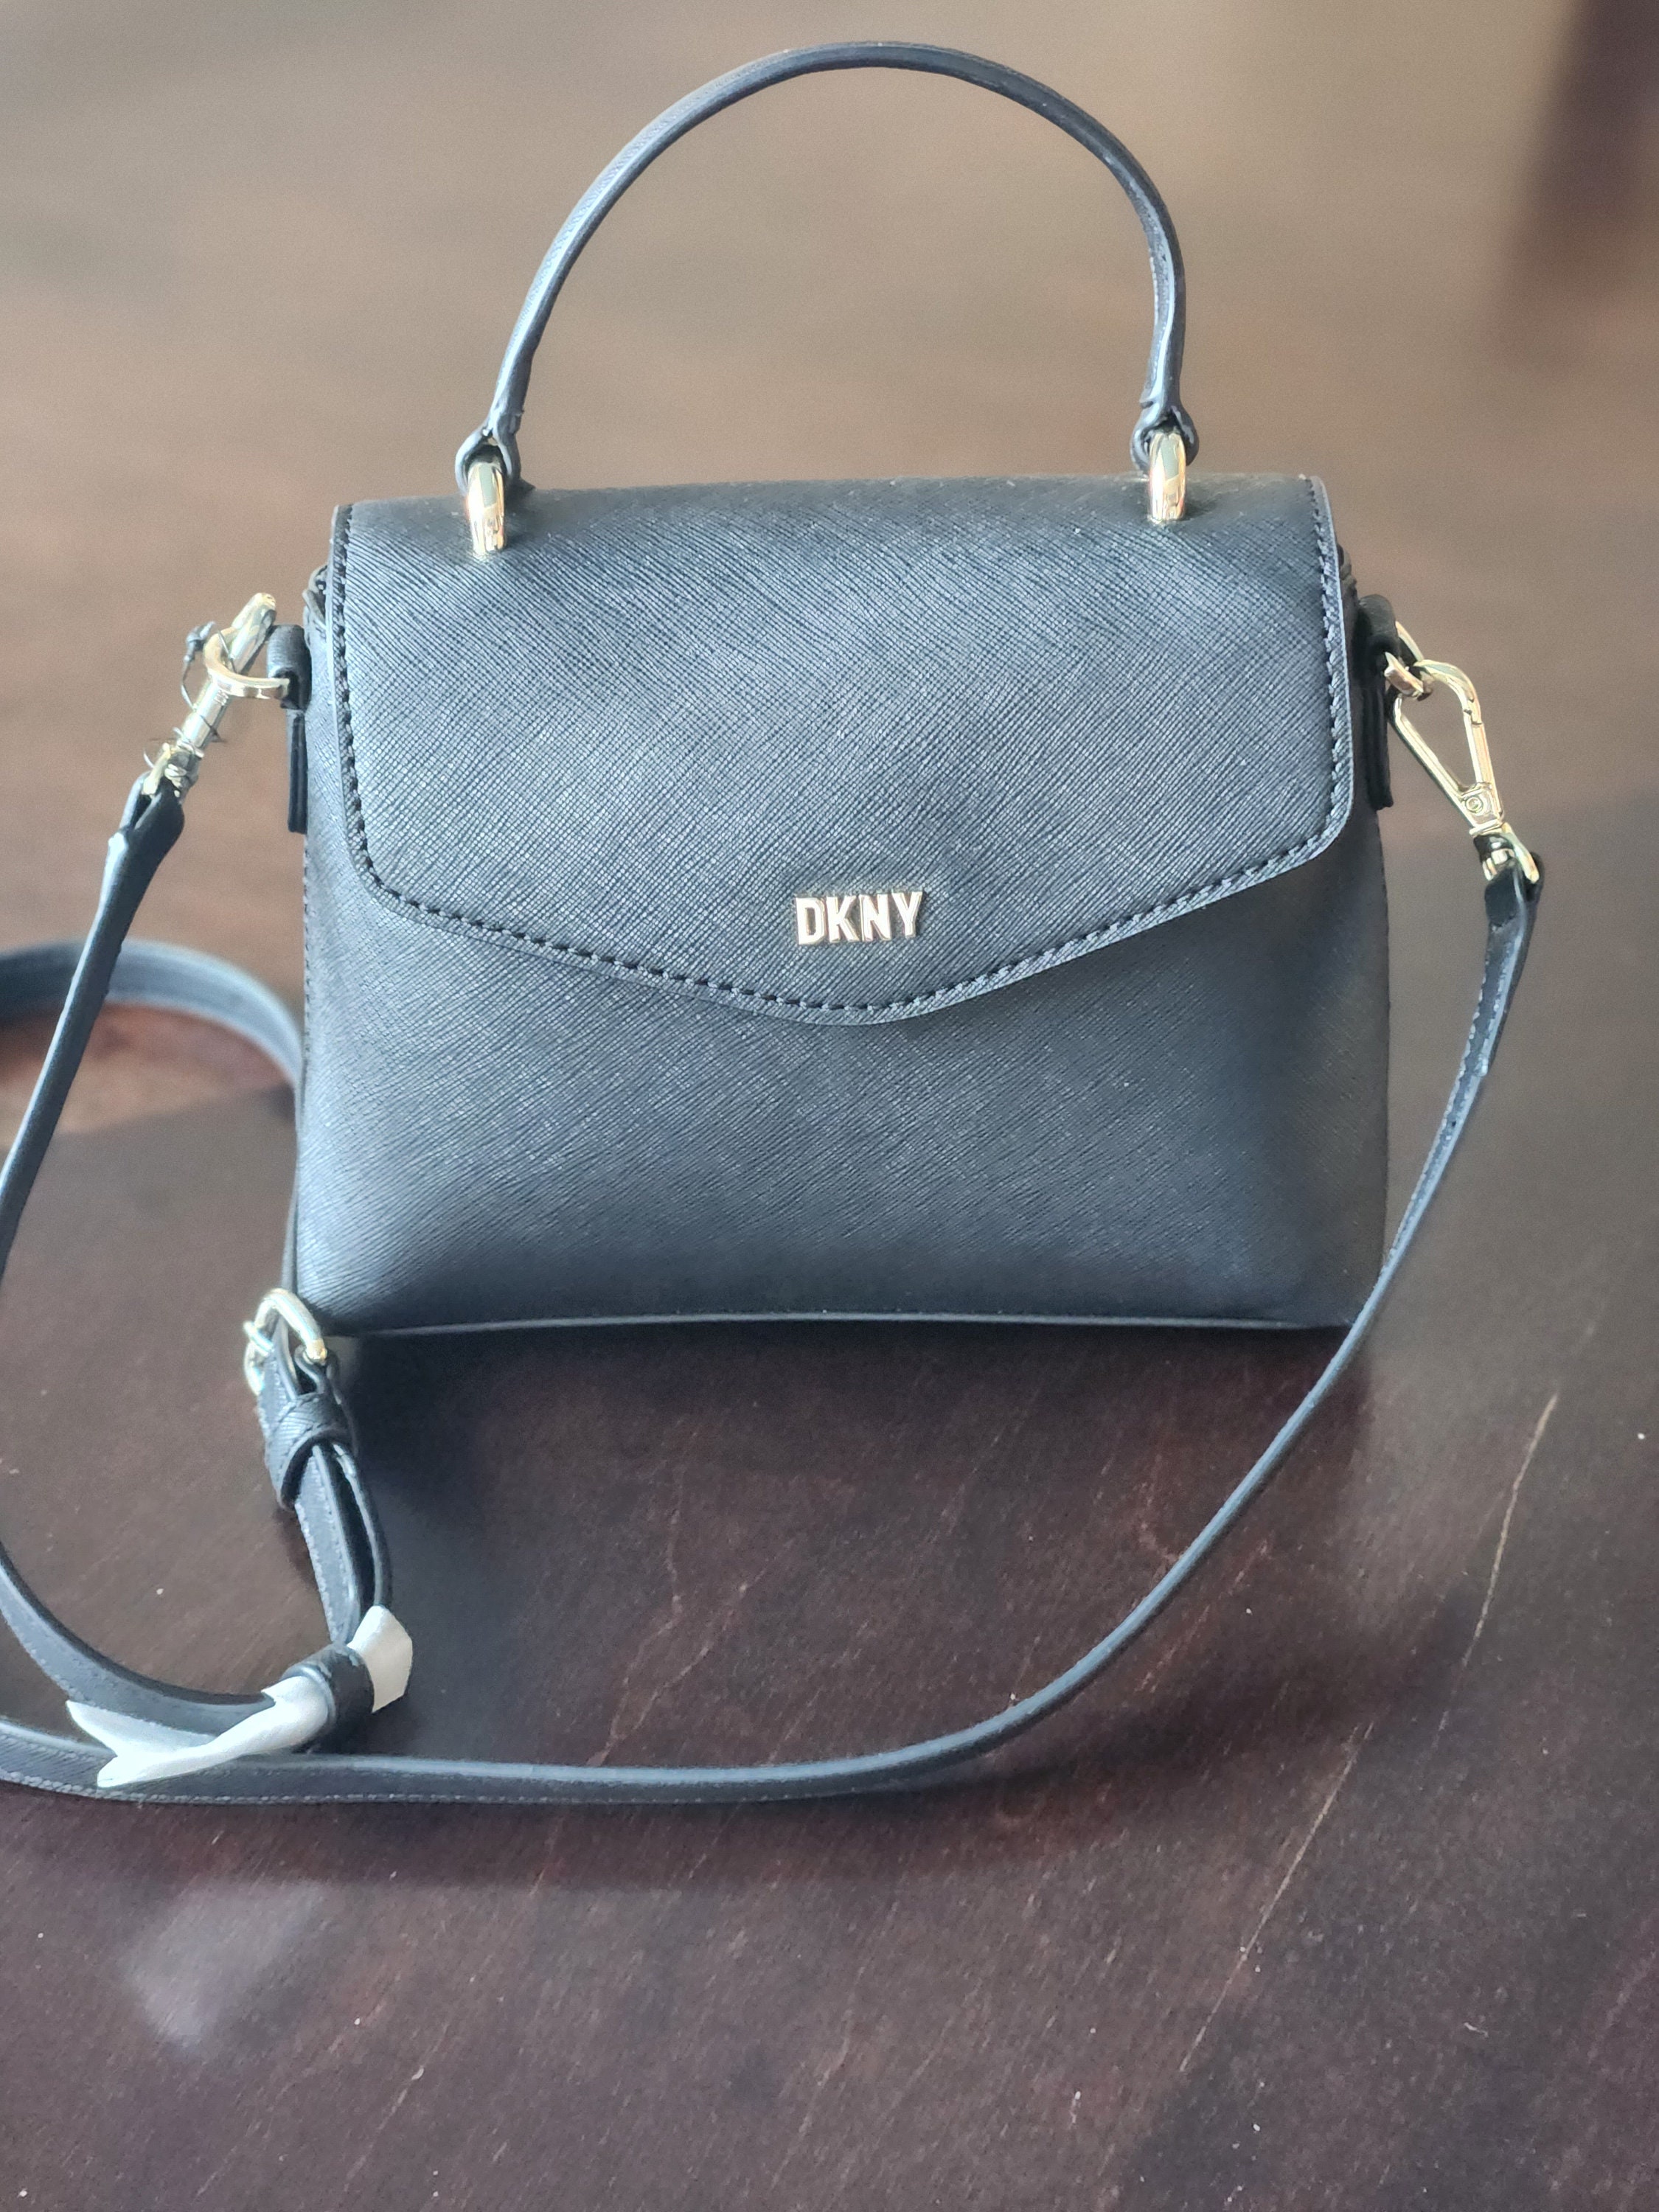 How can one authenticate a DKNY handbag? - Quora